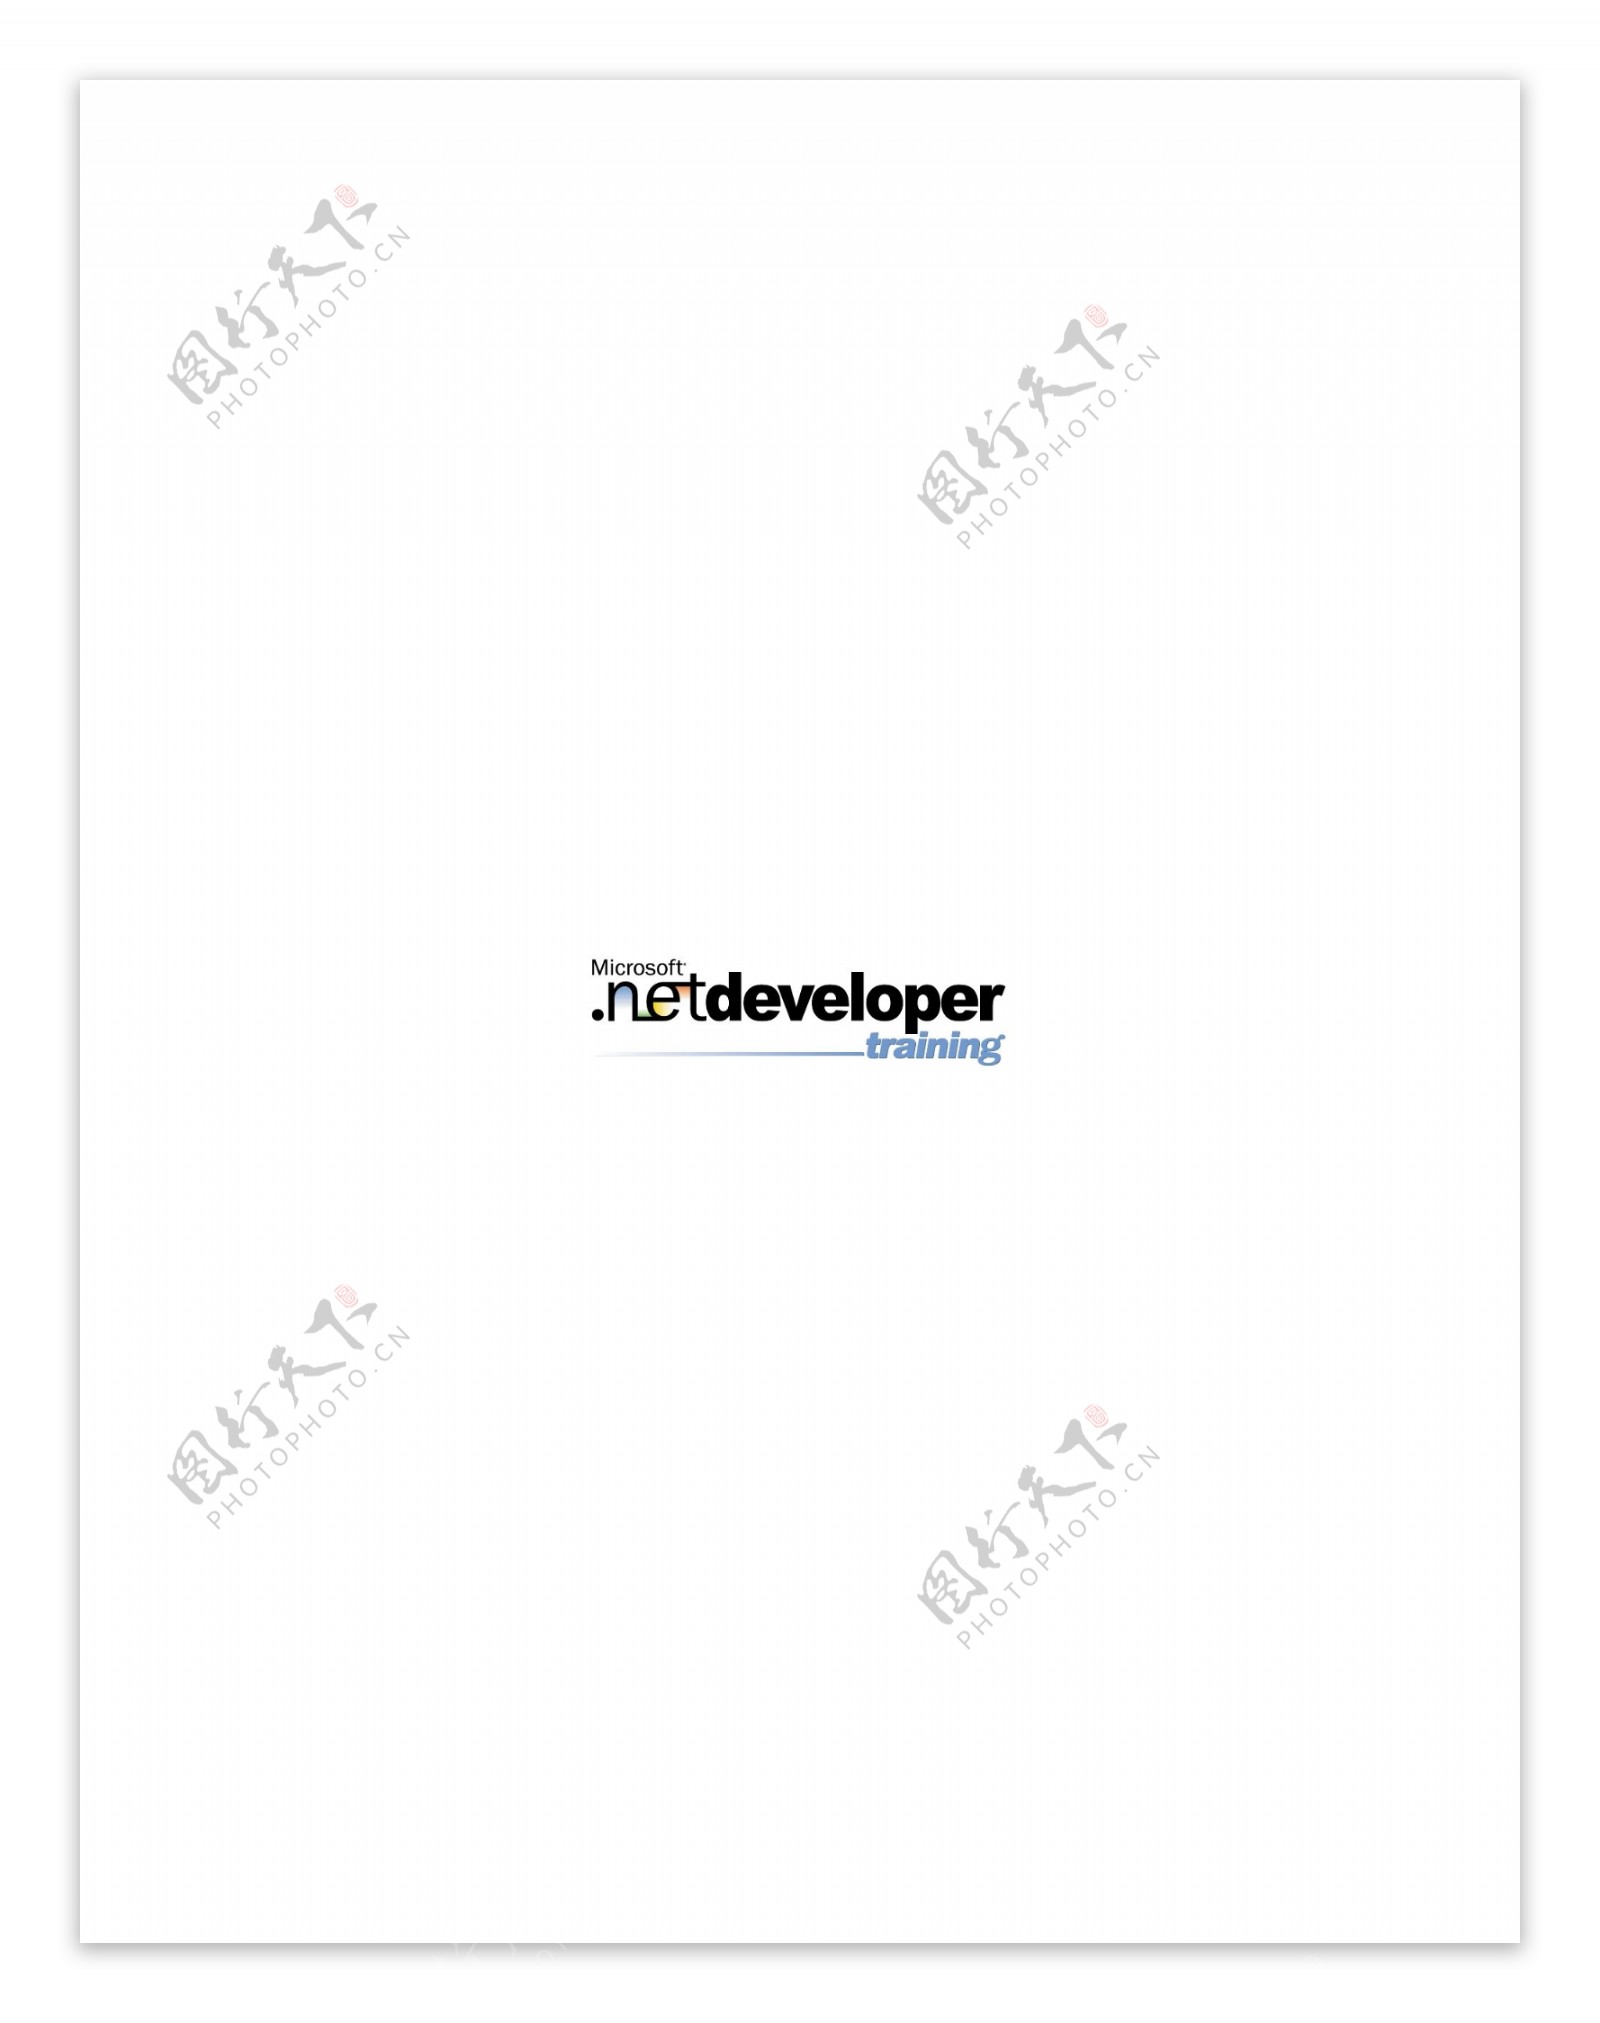 Microsoftnetdevelopertraininglogo设计欣赏Microsoftnetdevelopertraining下载标志设计欣赏